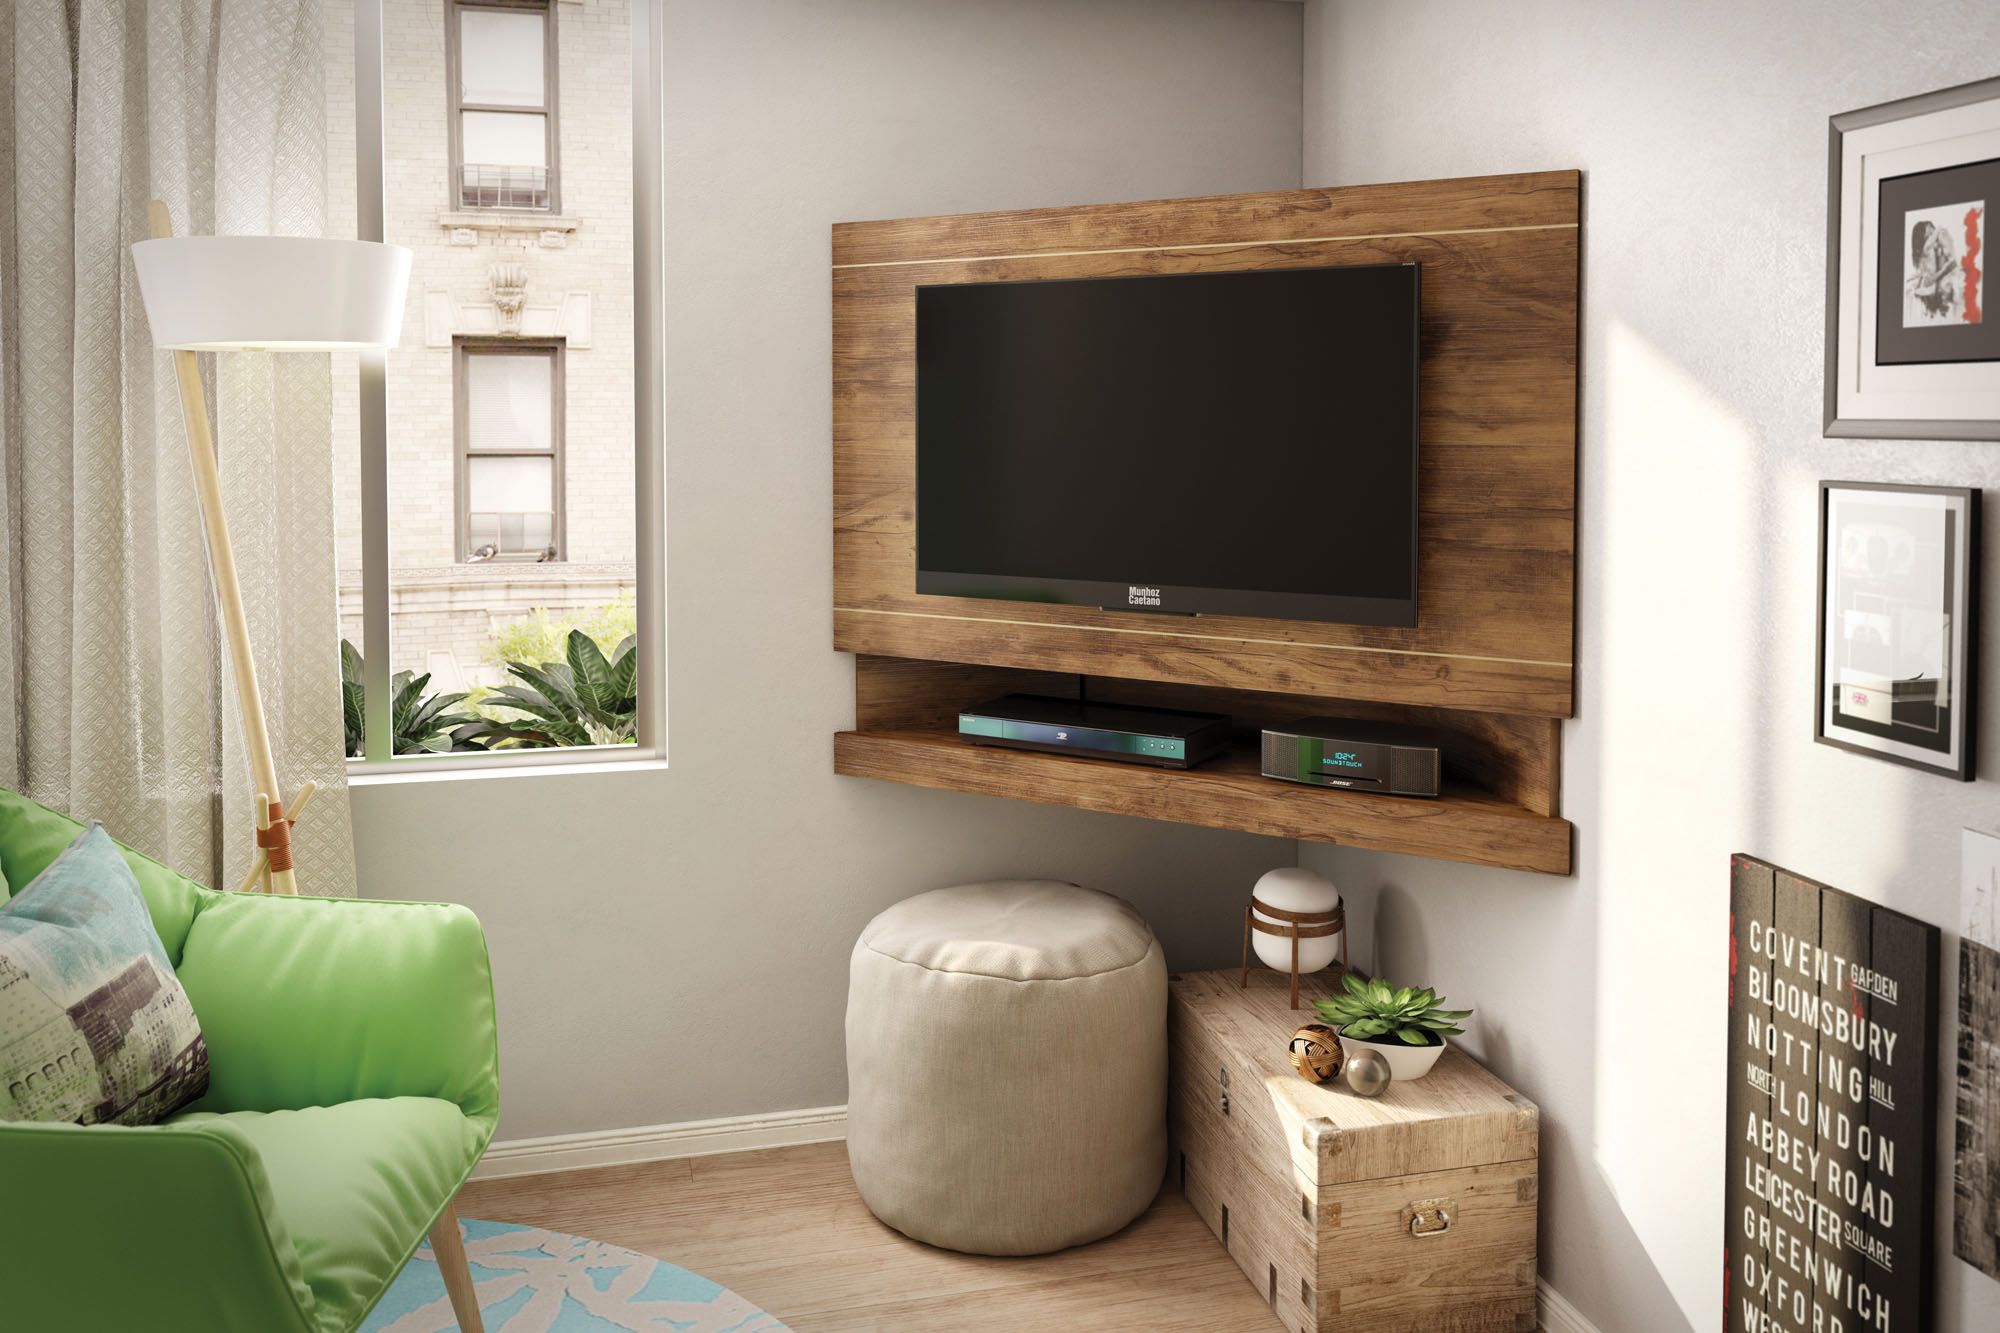 Телевизор на стене — идеи размещения и декора простраства